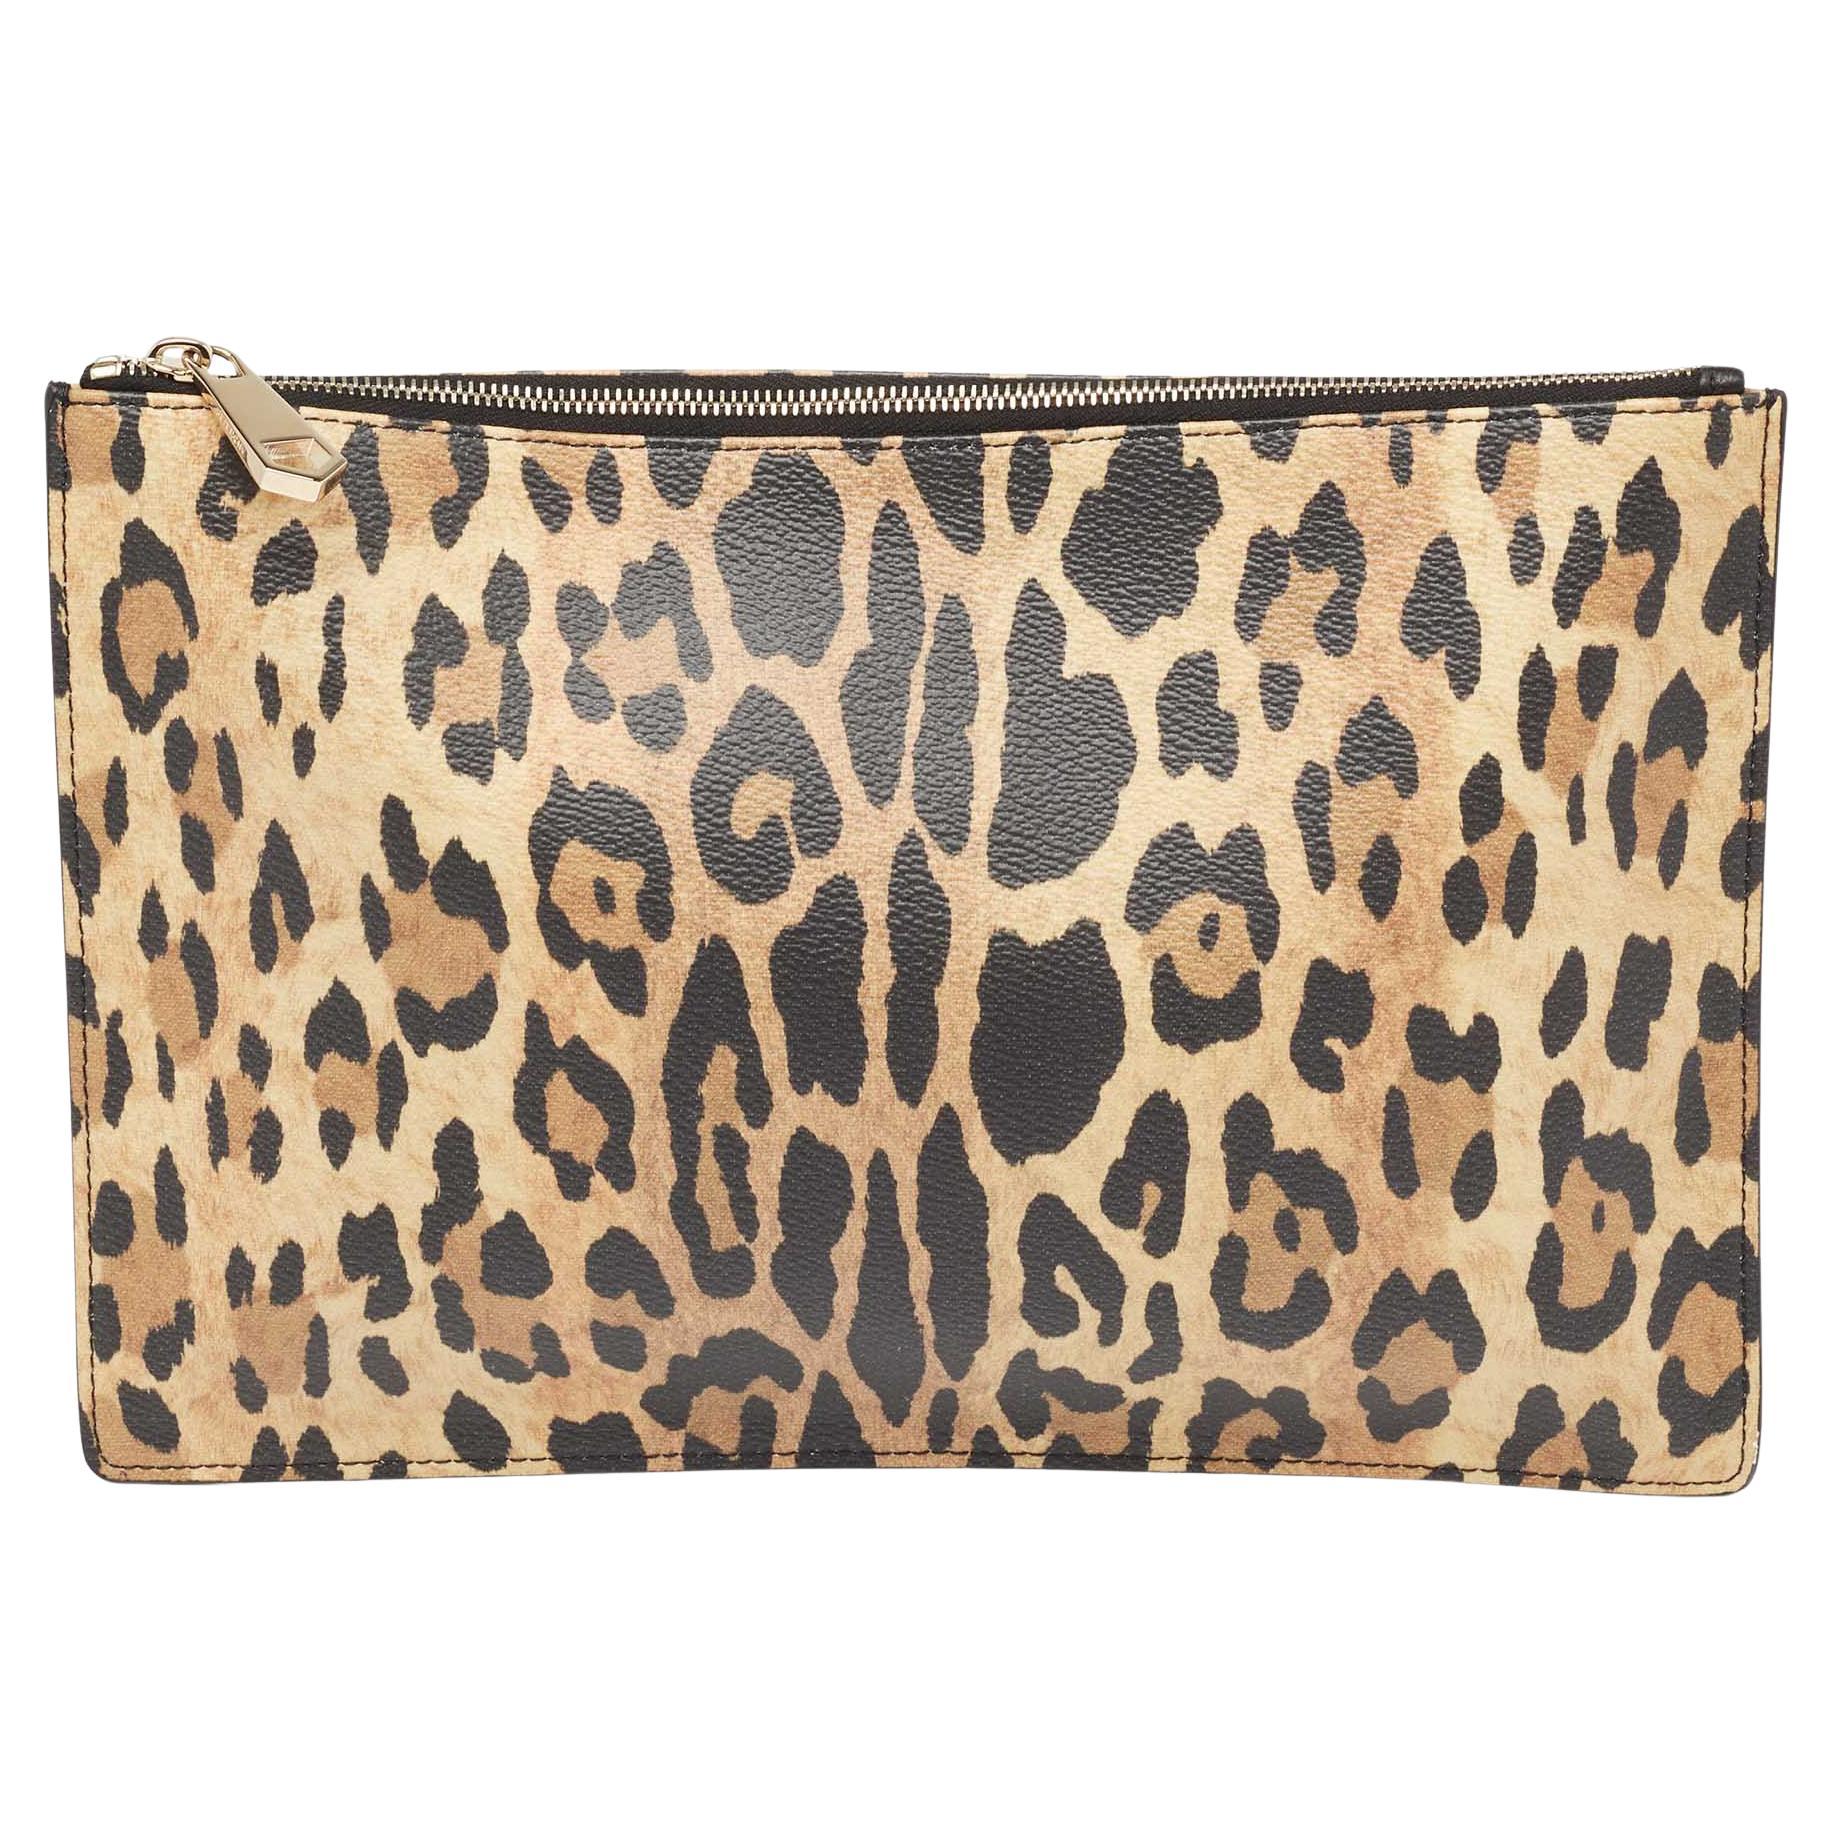 SWANKYSWANS Sasha Faux Snakeskin Leopard Zebra Envelope Clutch Bag 